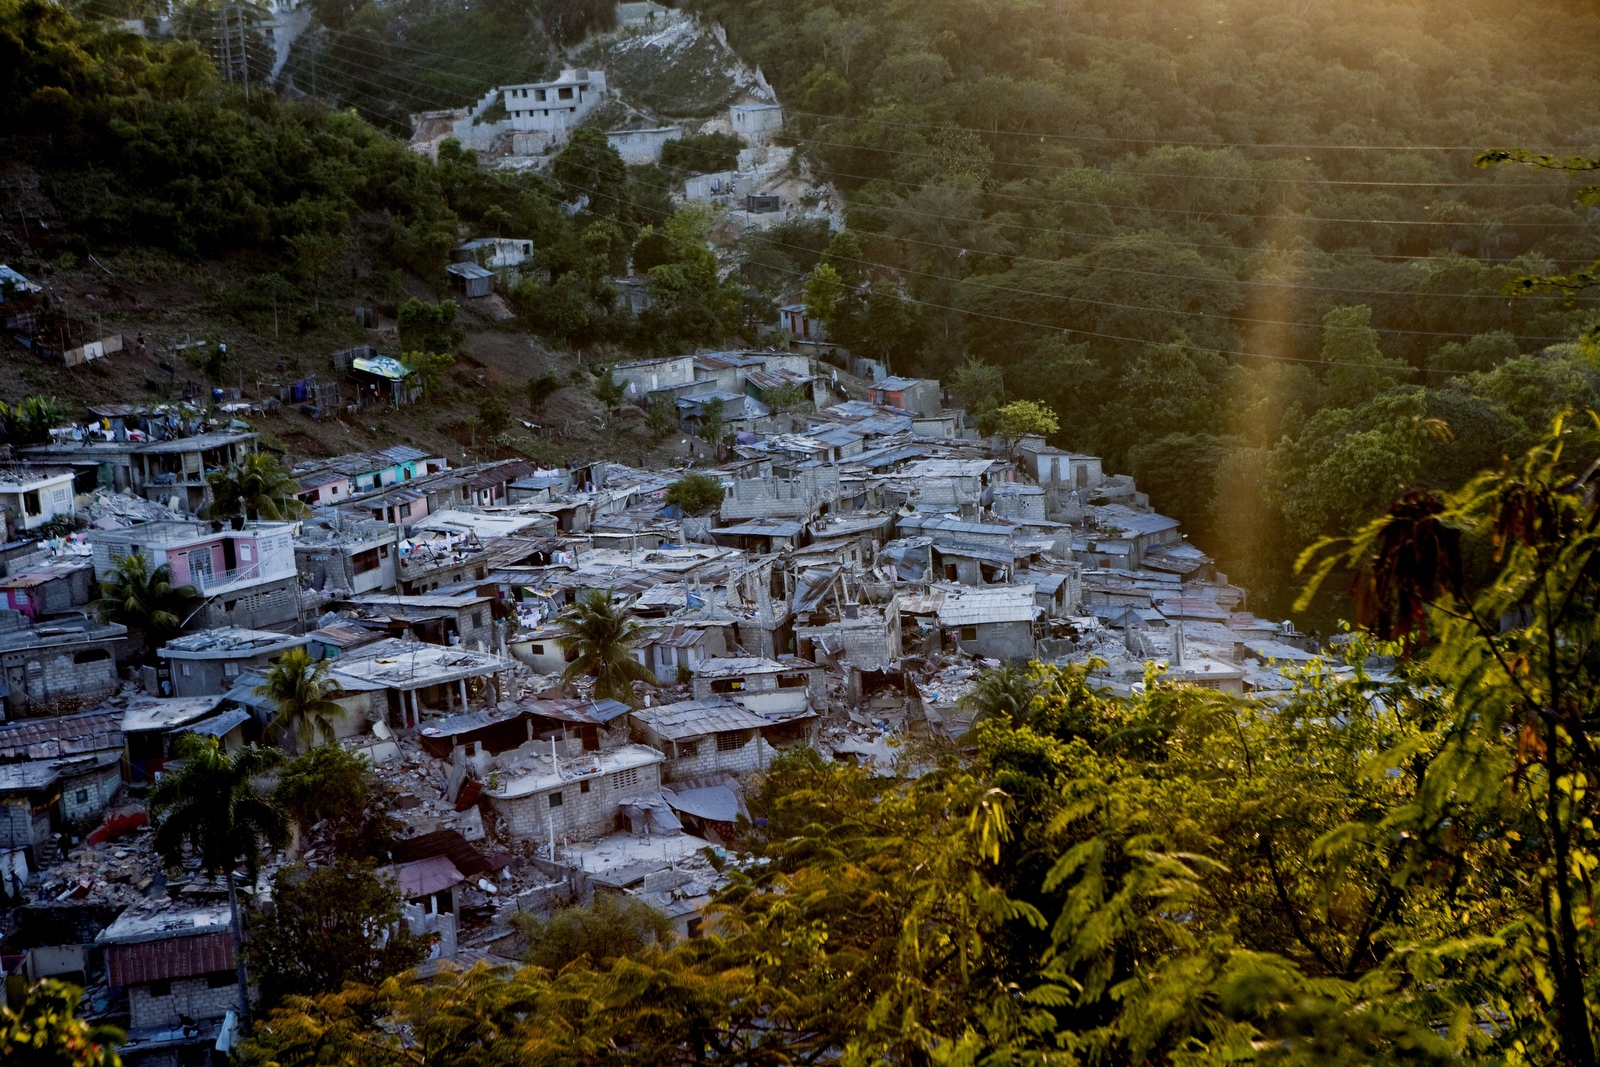 The Earthquake in Haiti